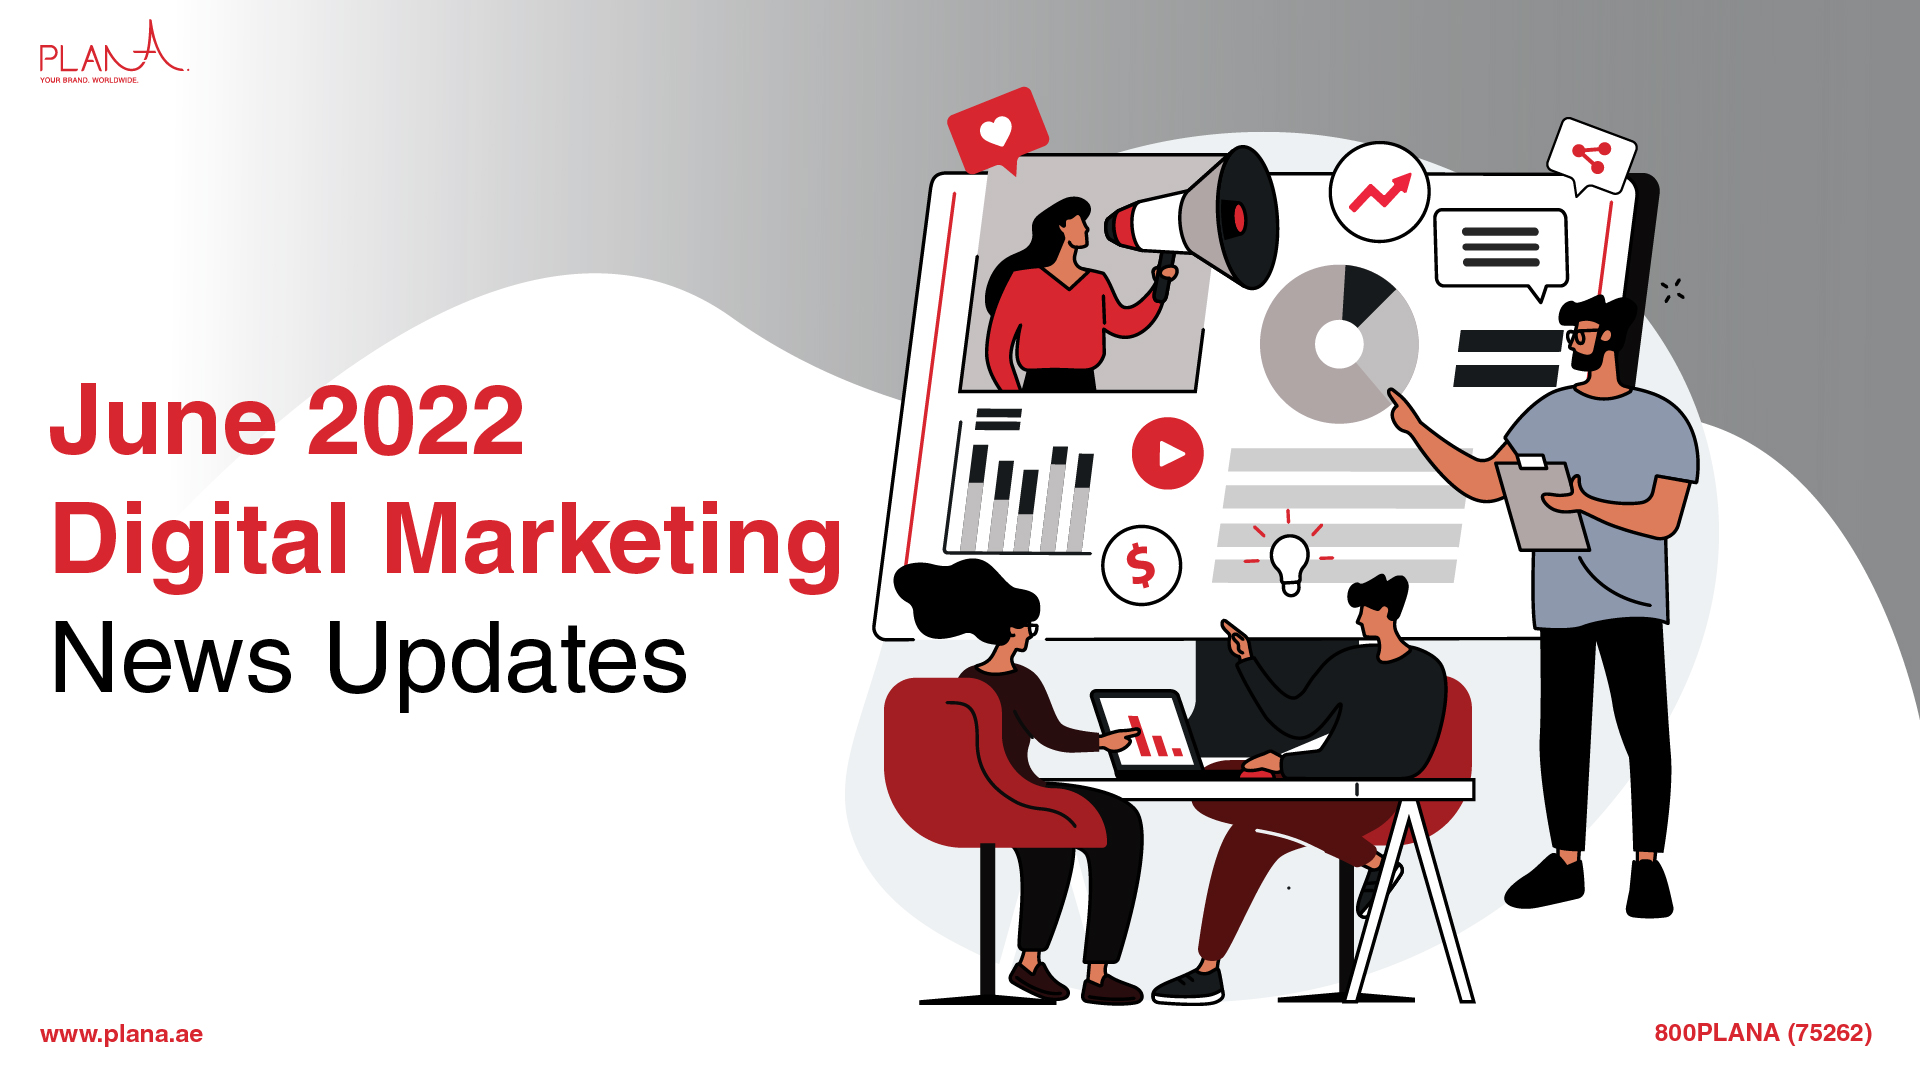 June 2022 Digital Marketing News Updates